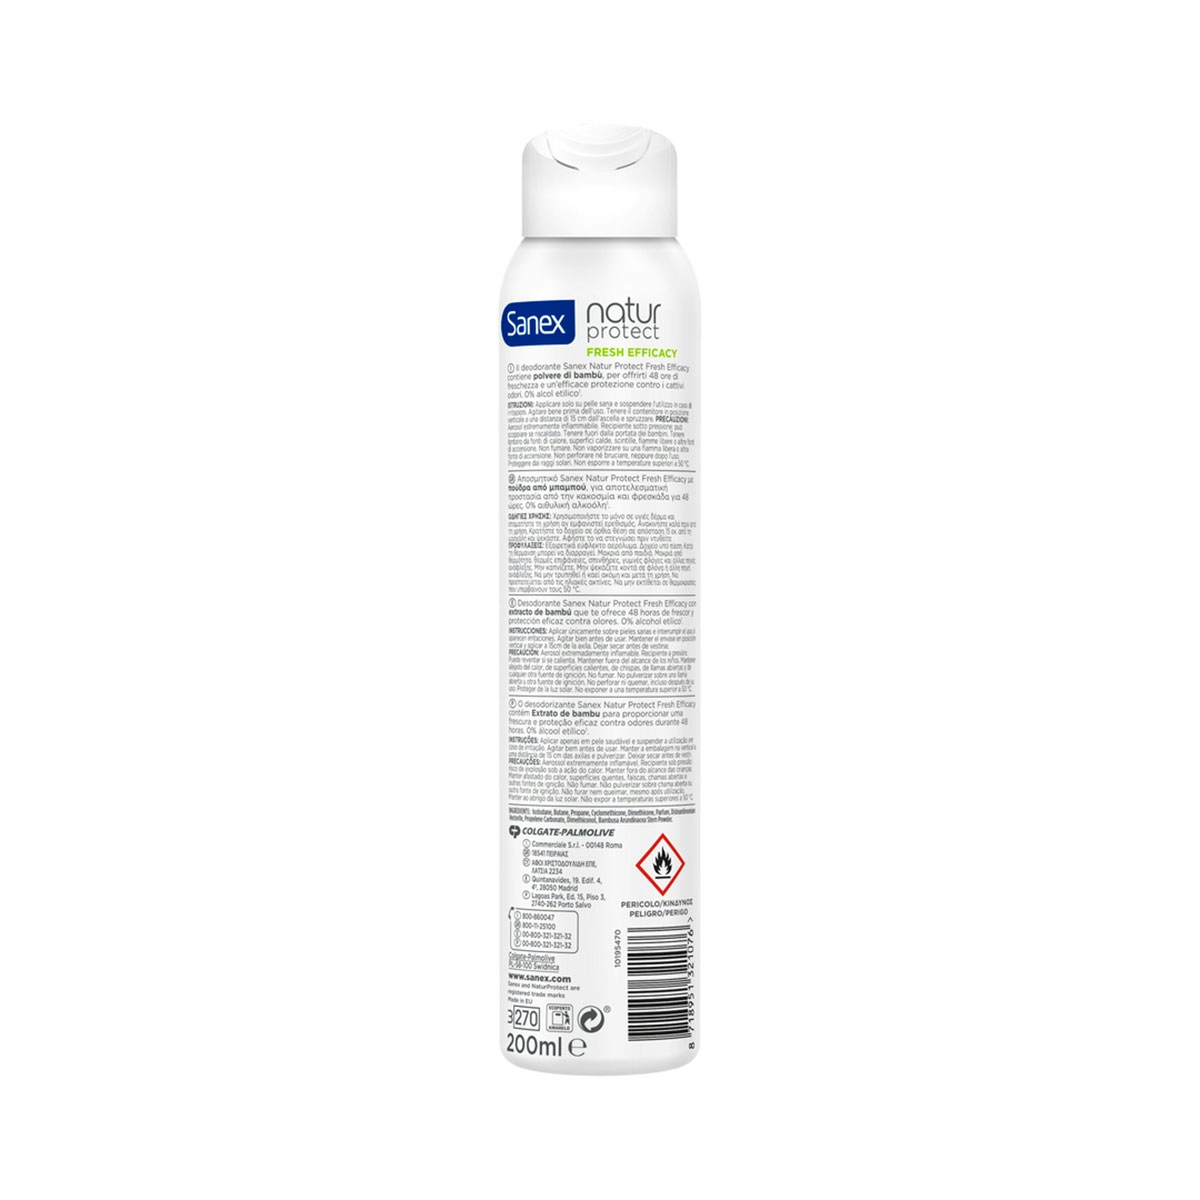 Desodorante spray Sanex Natur Protect Fresh Efficacy 24h con bambú natural 200ml